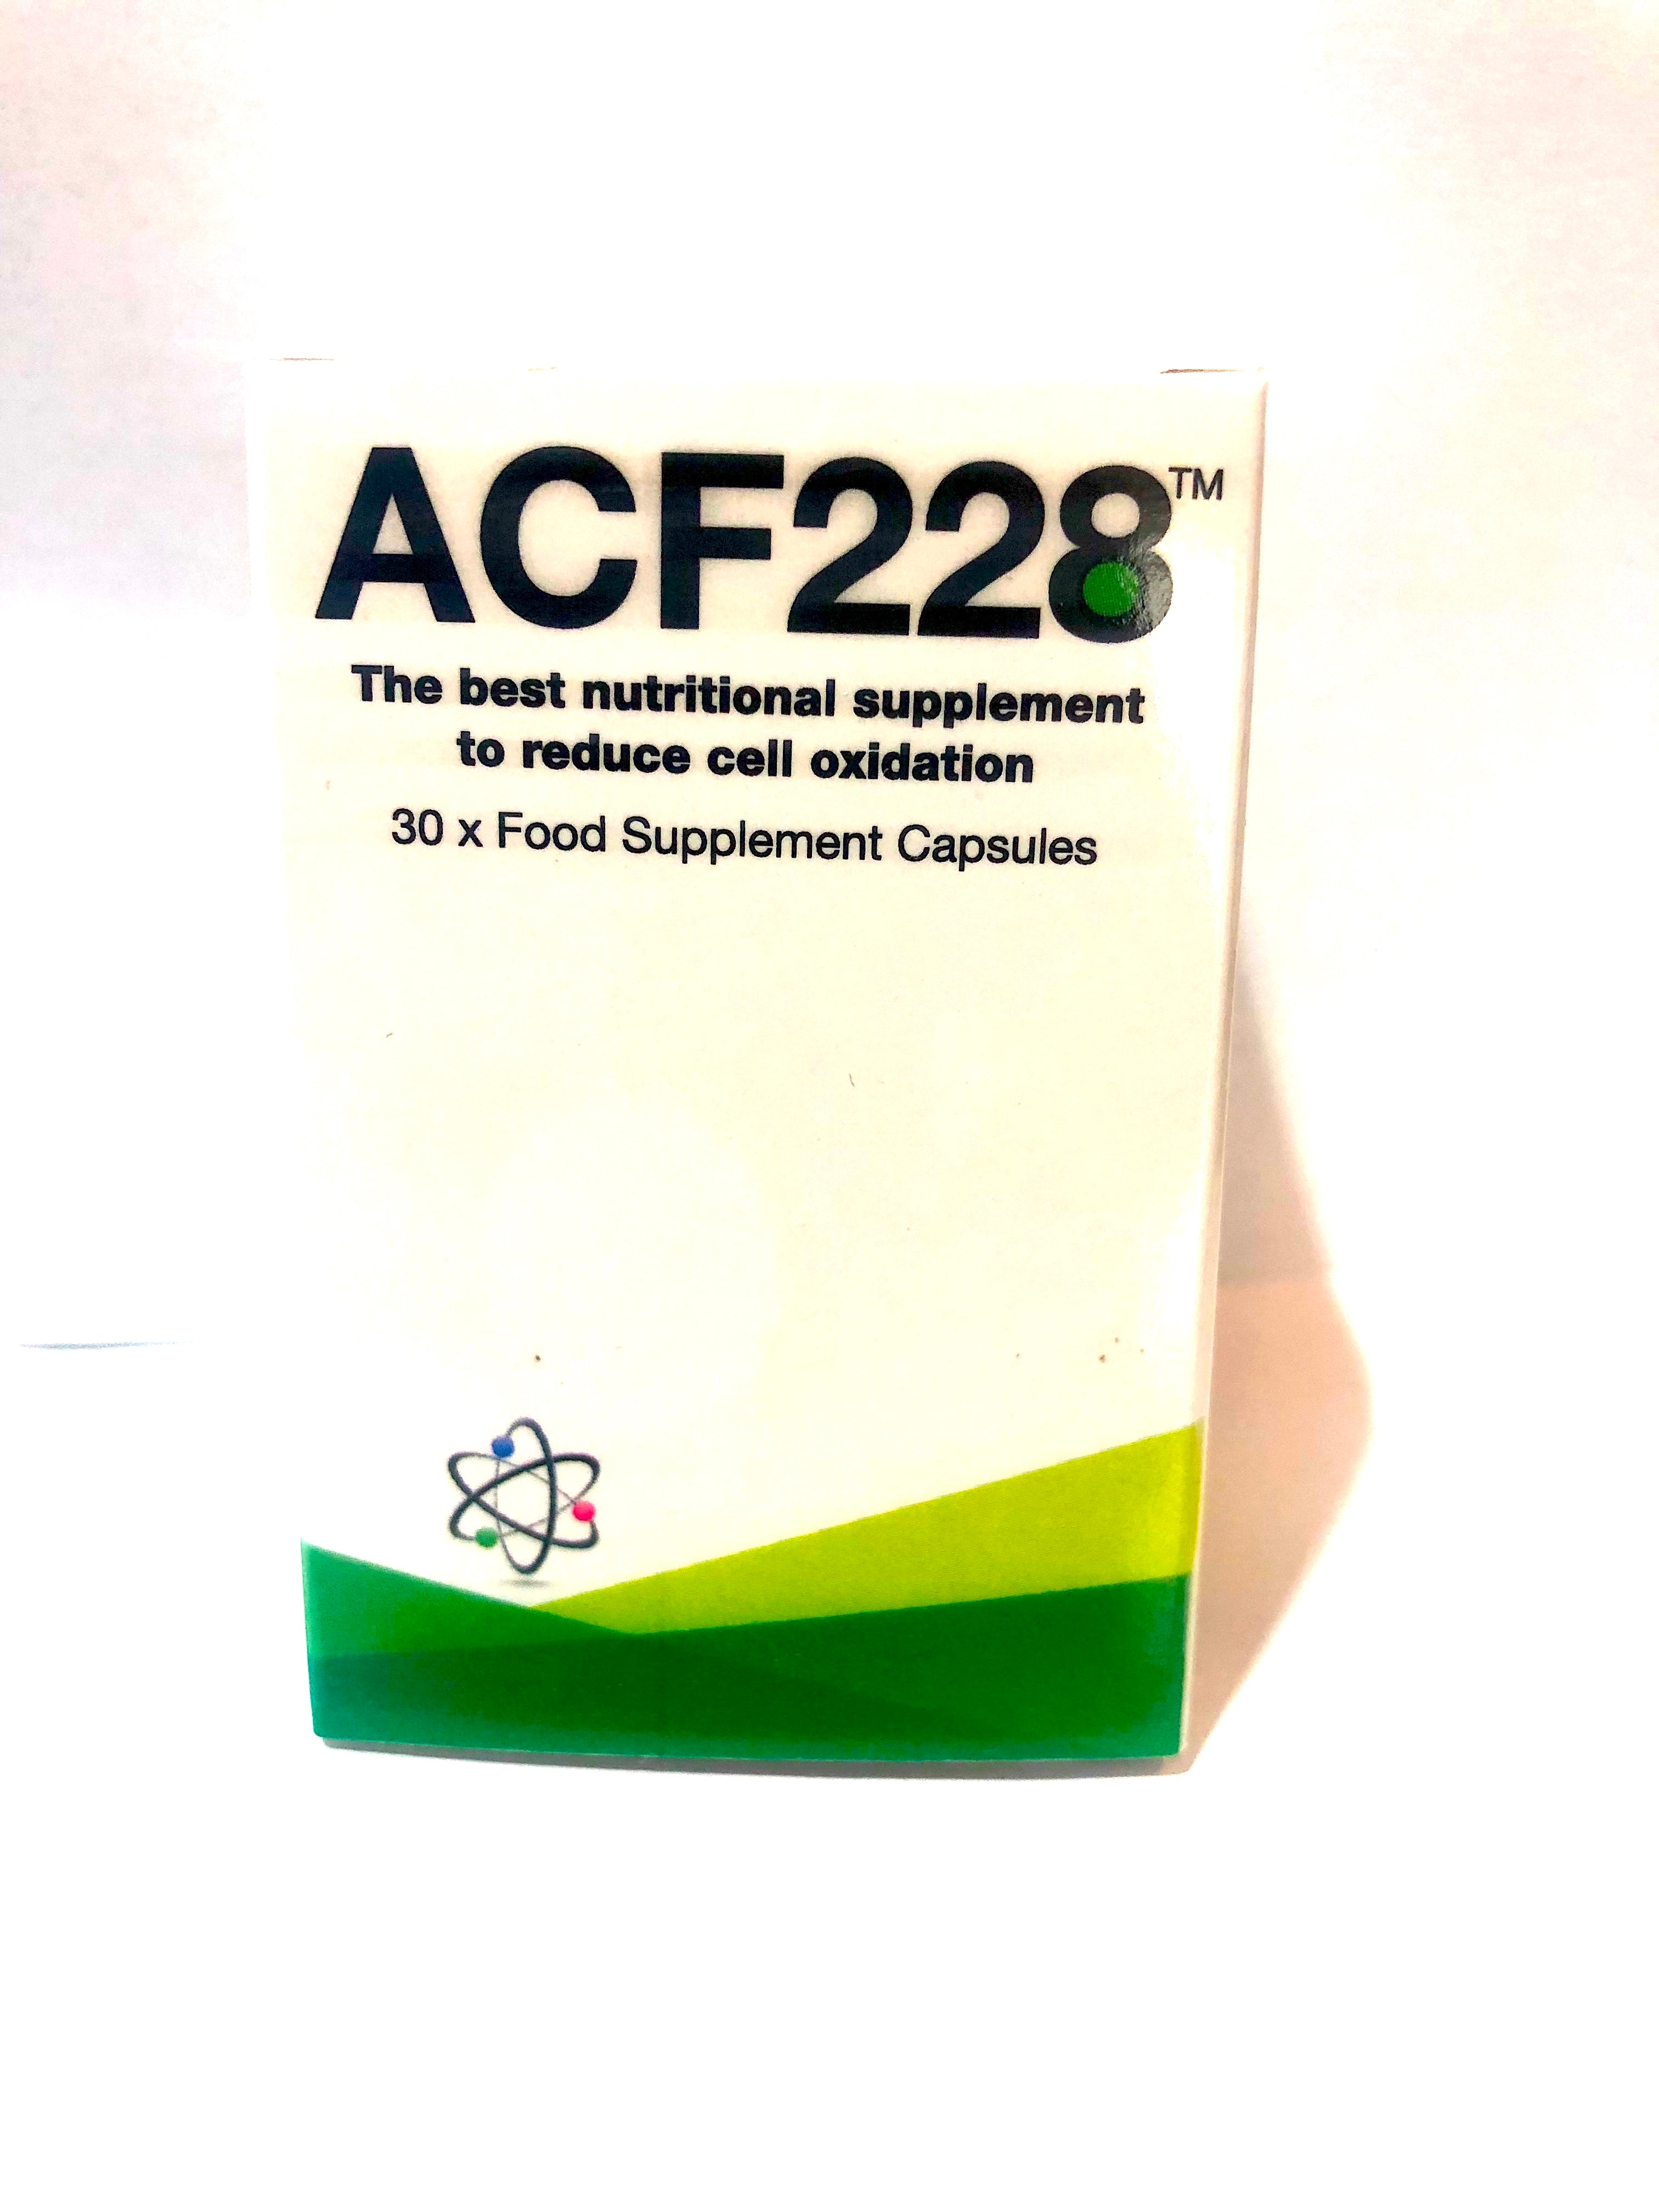 ACF228, Patented Optimal Free Radical Scavenger by Dr. Richard Lippman, $49.95 per bottle/30 tablets